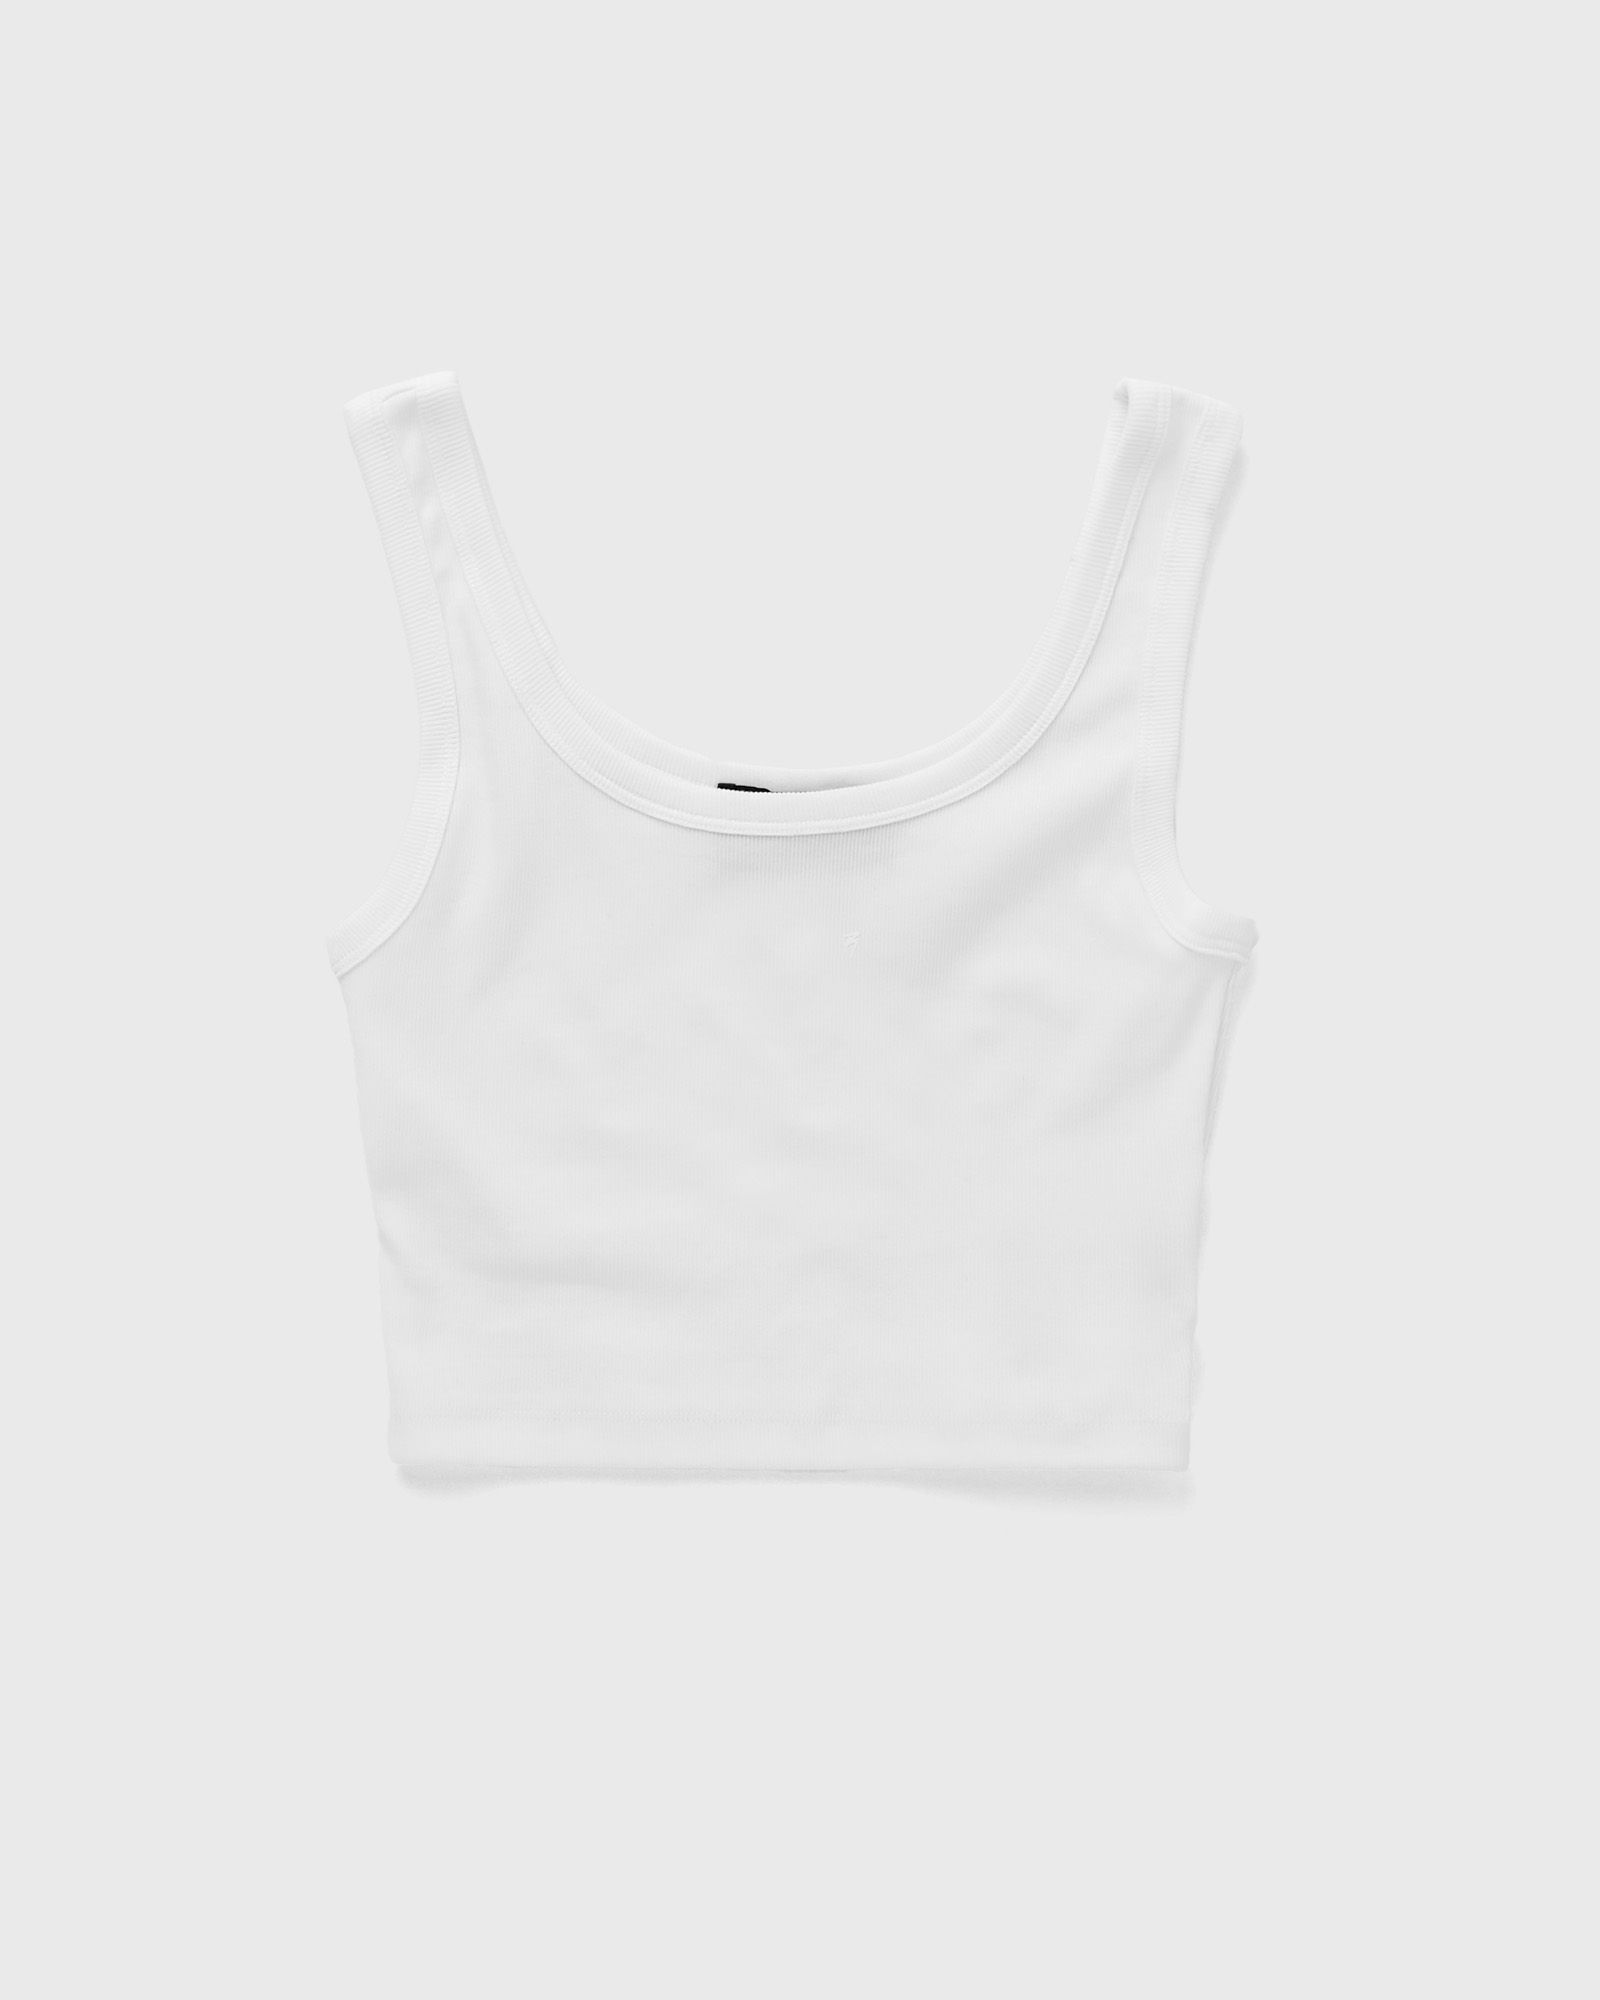 Jordan x J Balvin SP Women's Tank T-Shirt women Tops & Tanks white in Größe:XL von Jordan